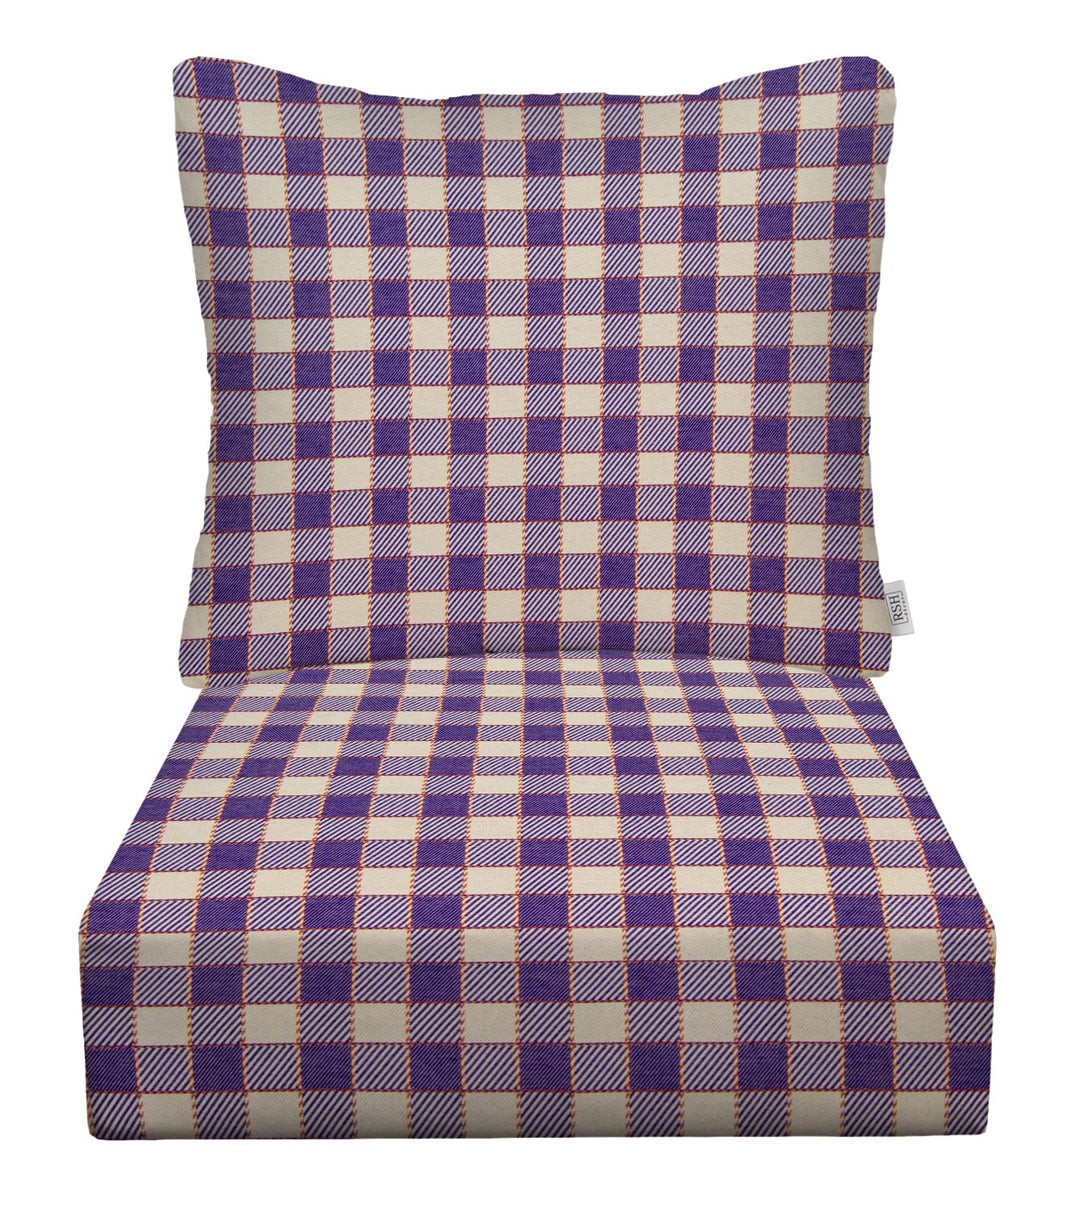 Deep Seating Pillow Back Chair Cushion Set, 23" x 24" x 5" Seat and 25" x 21" Back, Sunbrella Patterns - RSH Decor